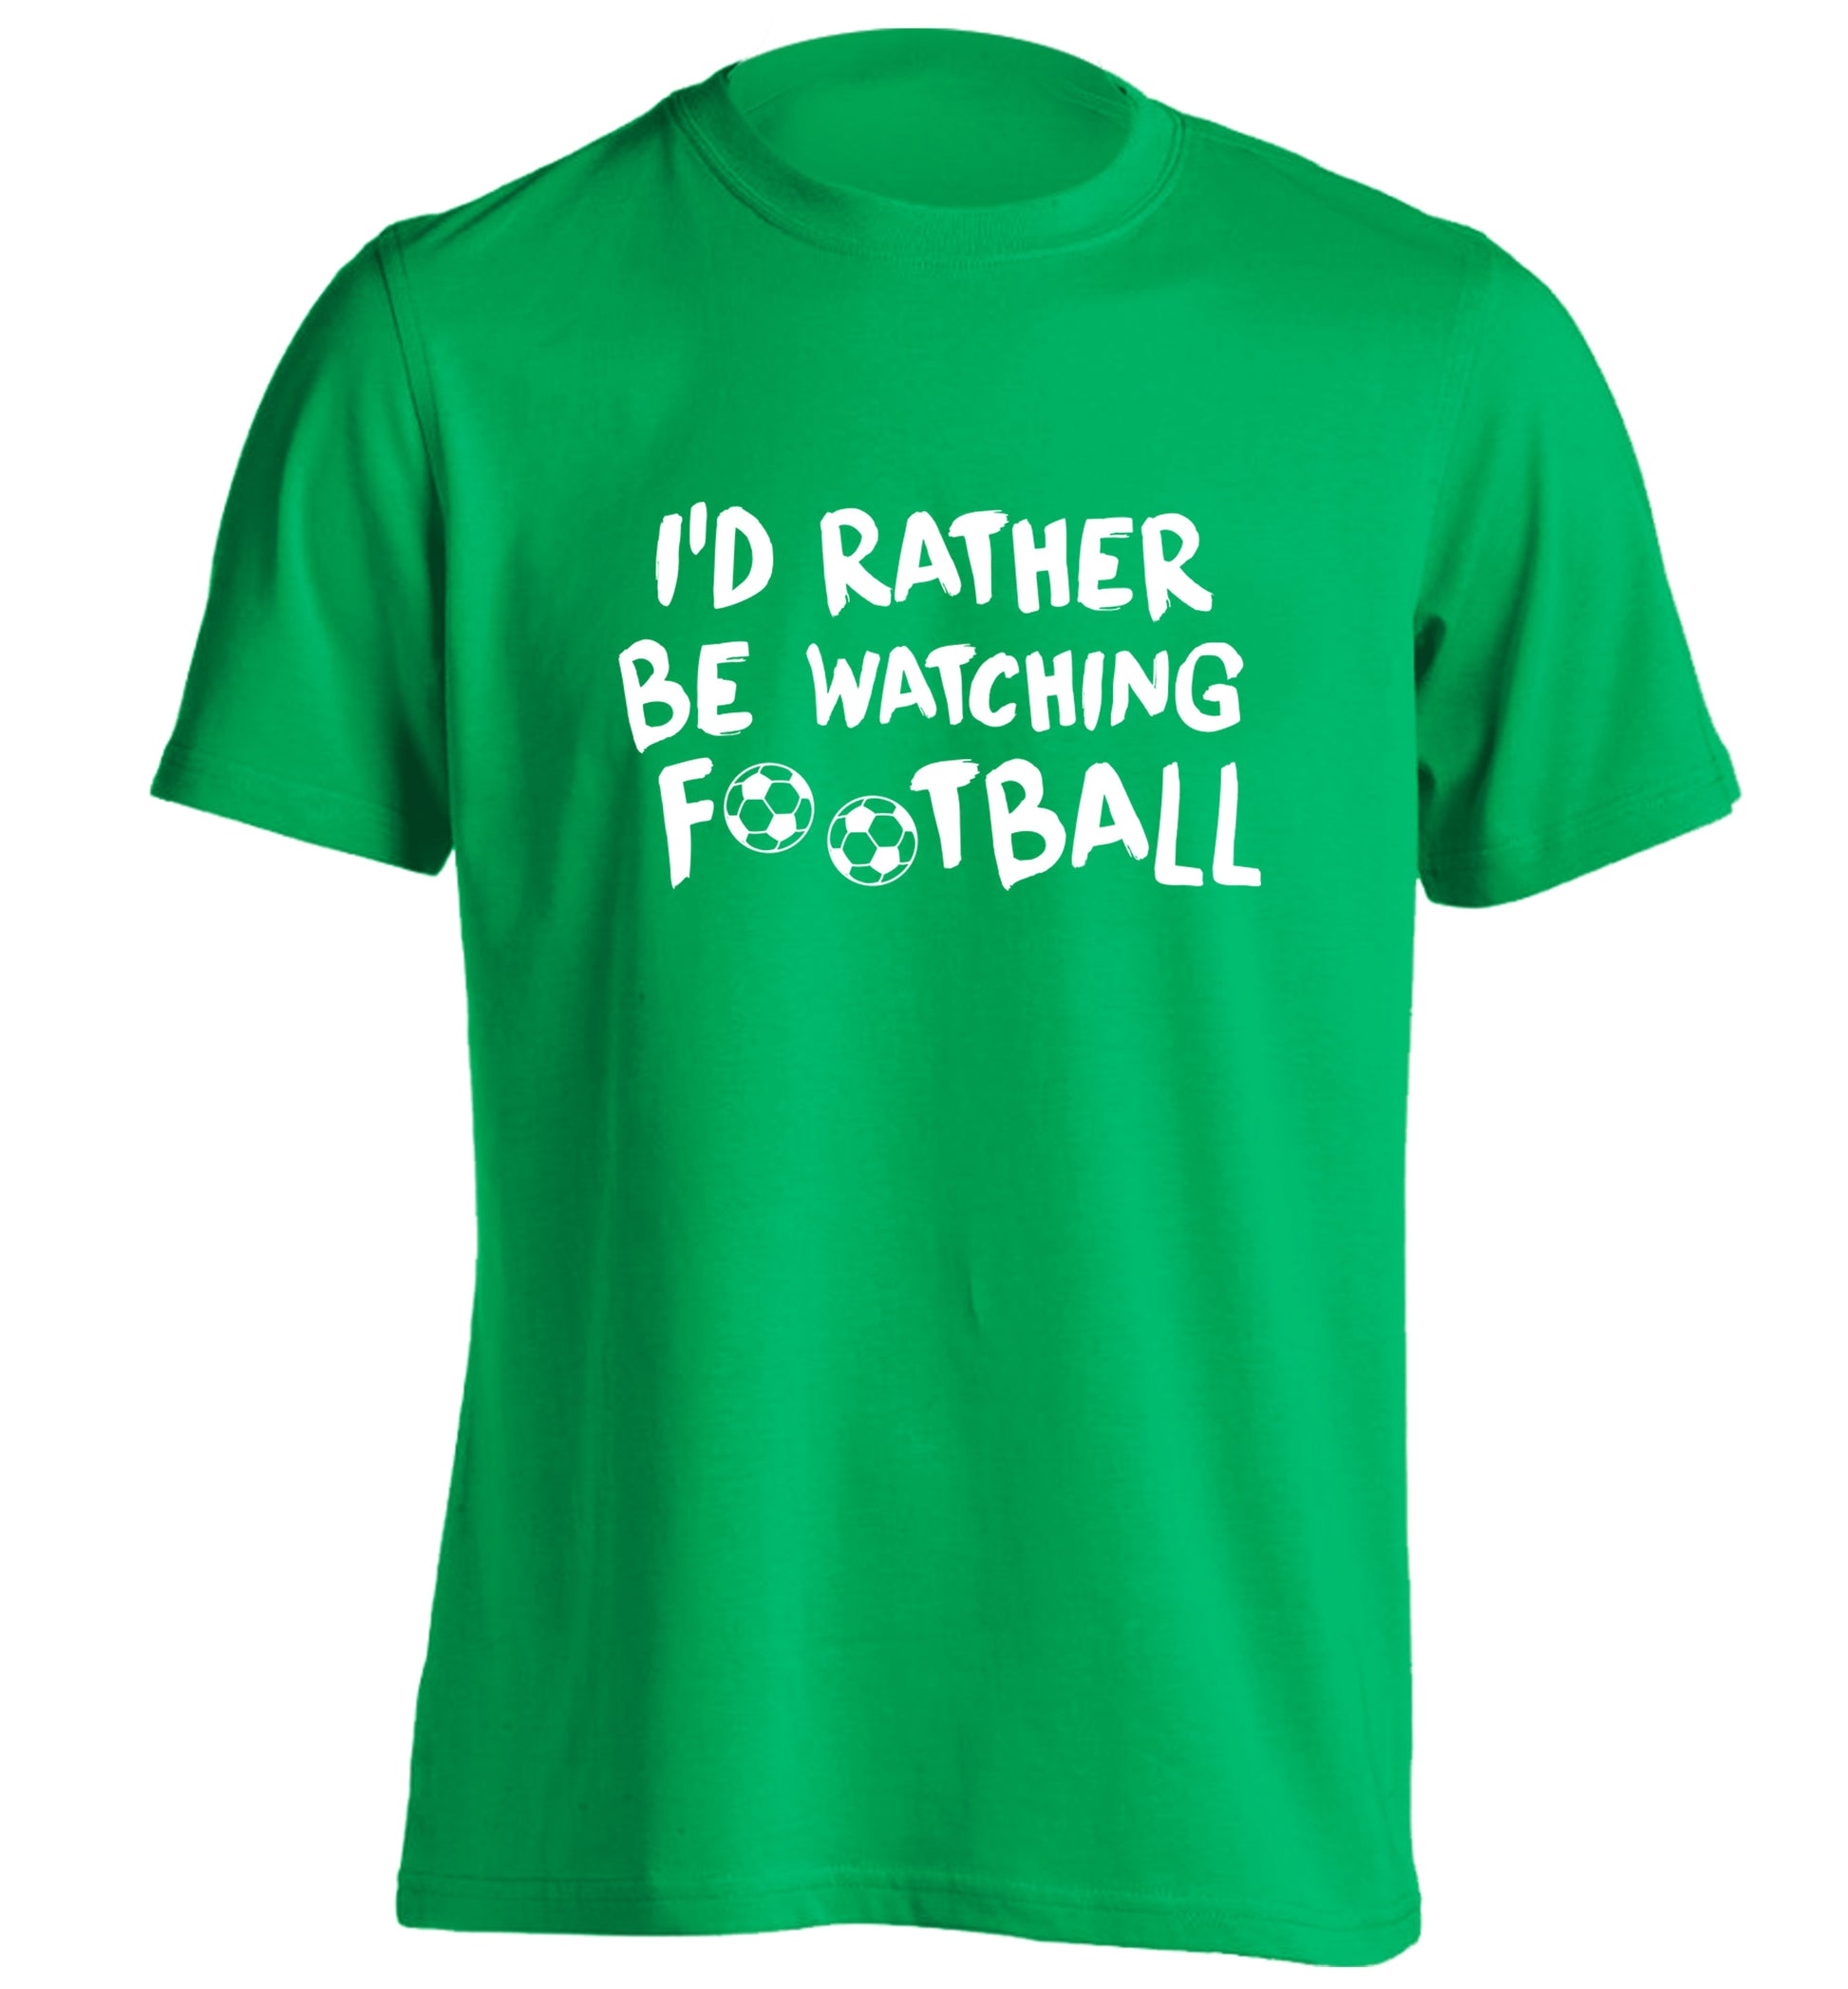 I'd rather be watching football adults unisexgreen Tshirt 2XL